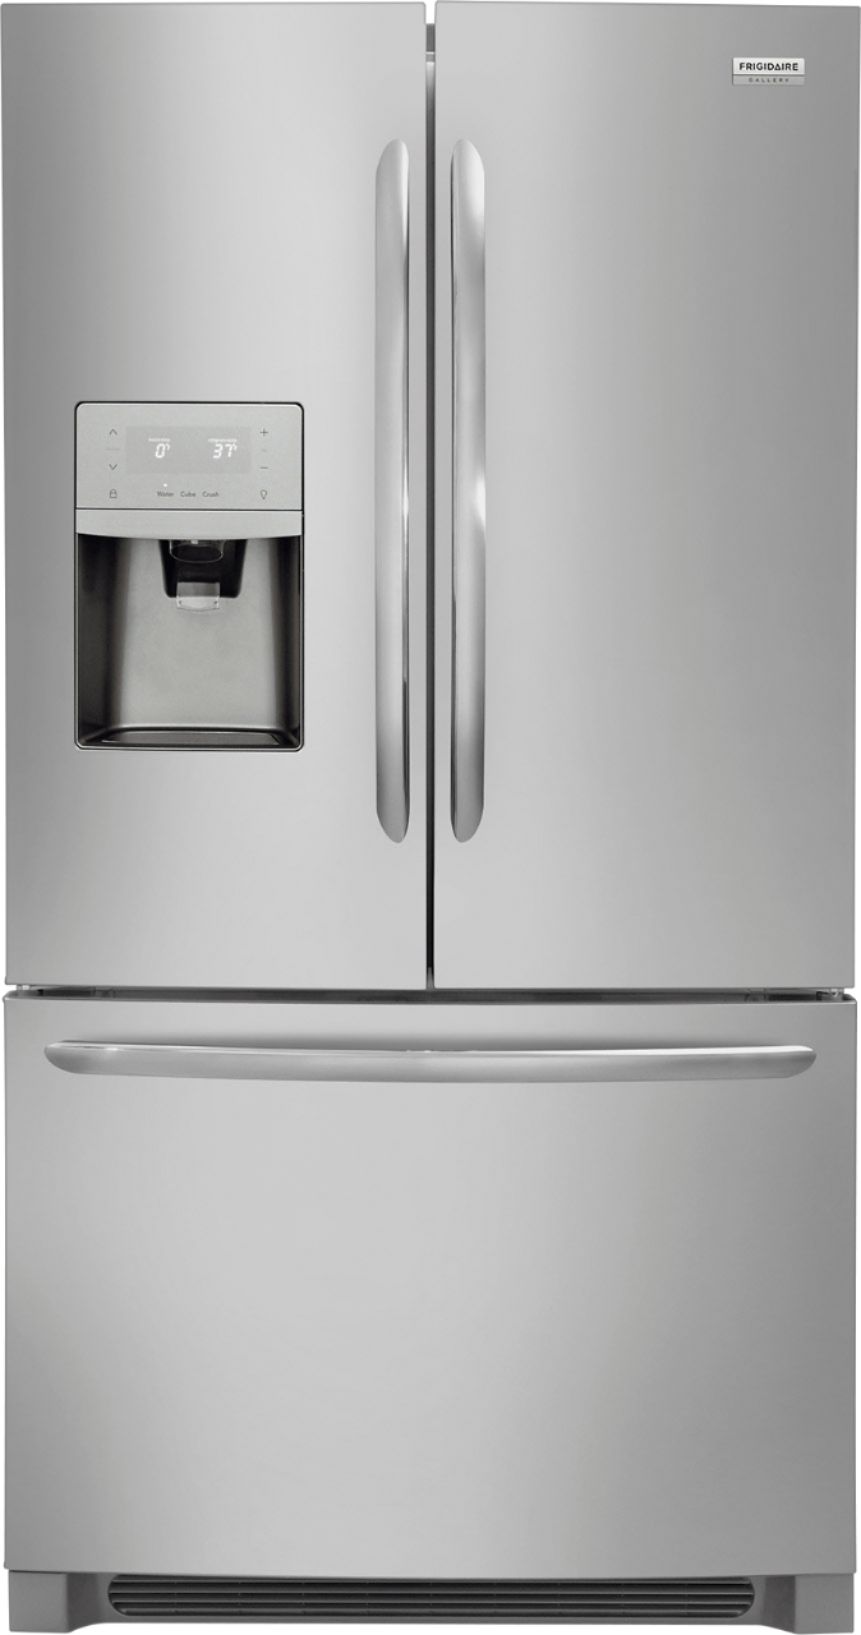 22+ Frigidaire french door refrigerator ice maker leaking ideas